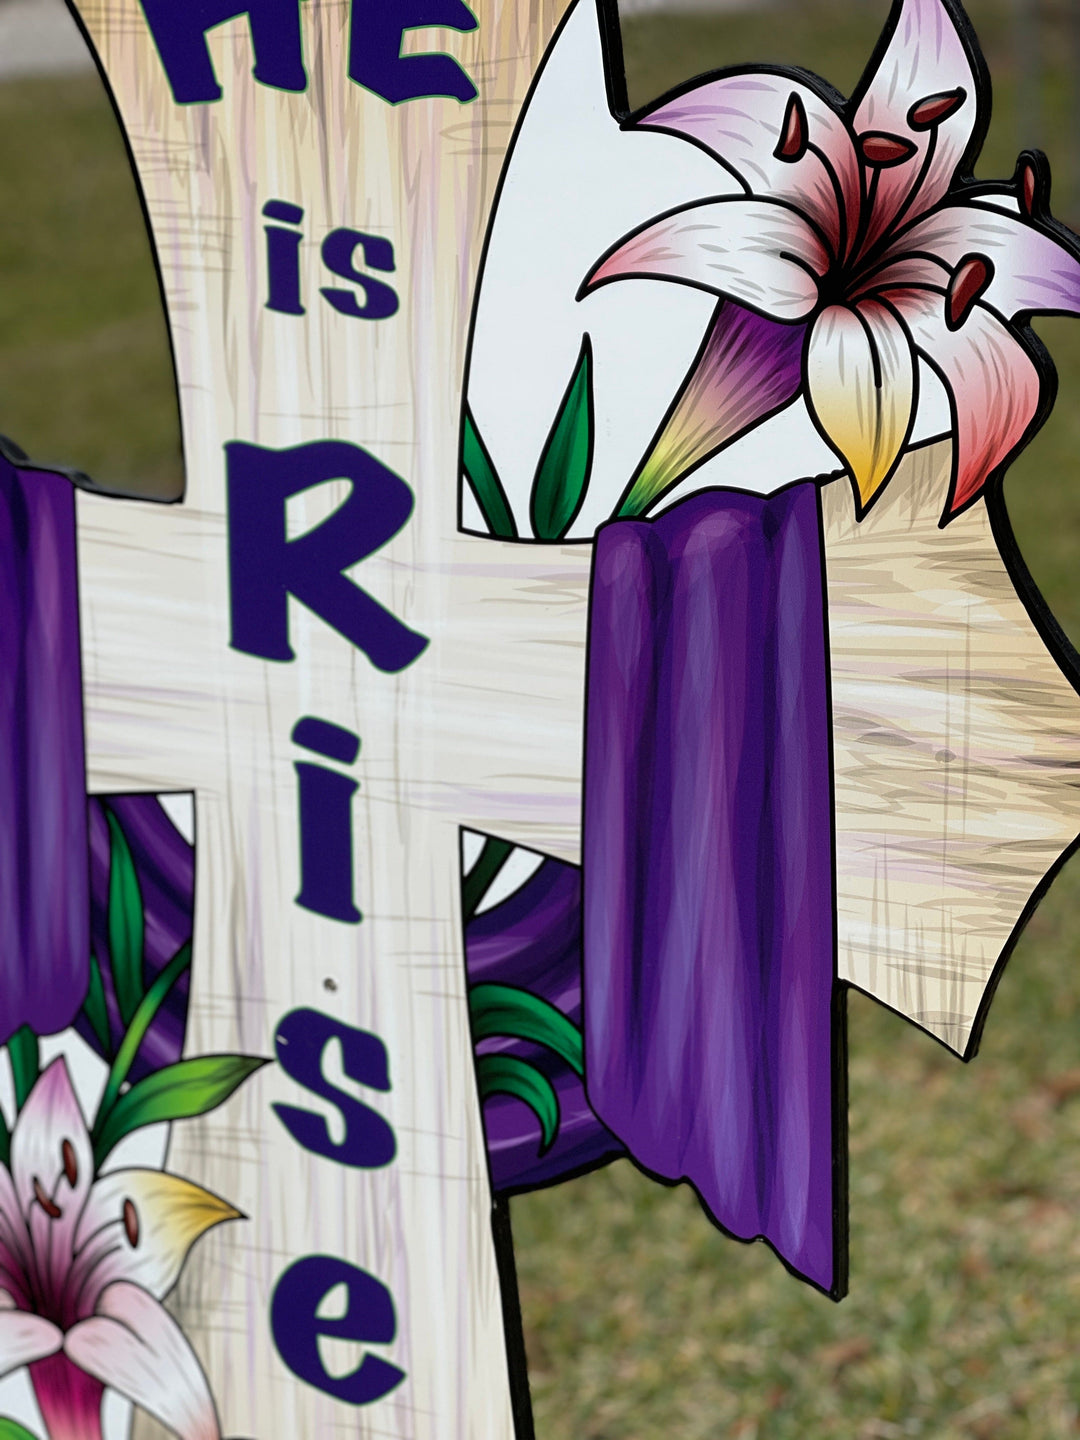 He is Risen Easter Cross yard sign